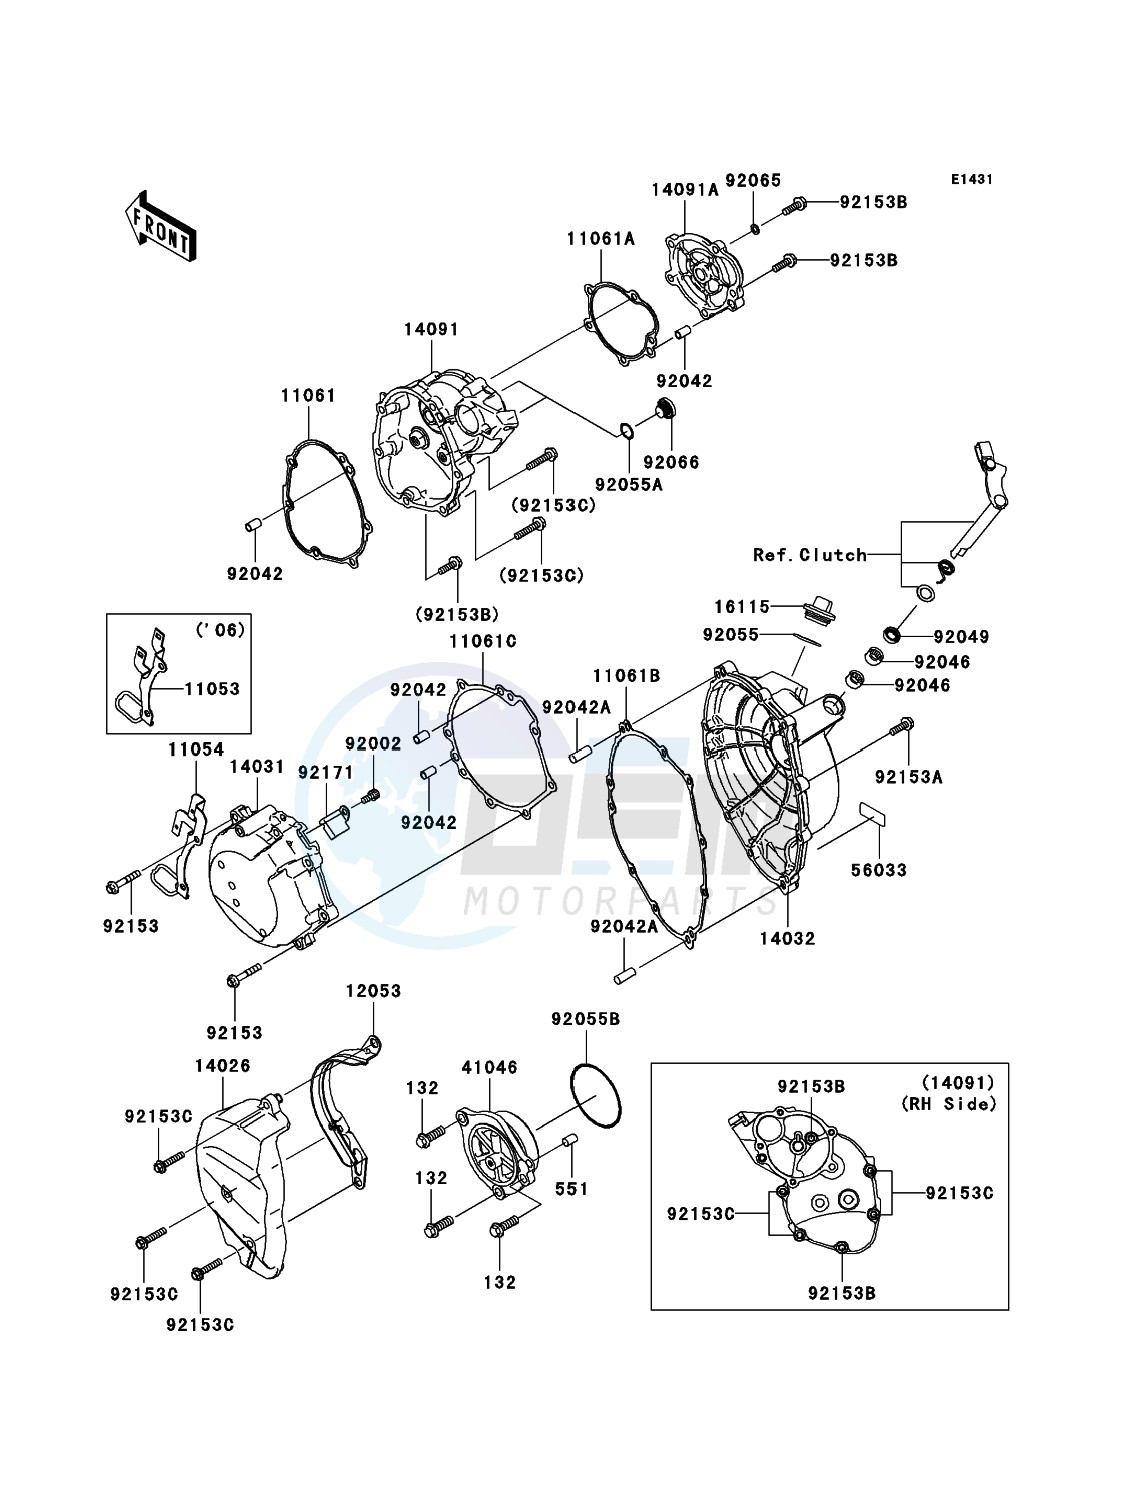 Engine Cover(s) blueprint